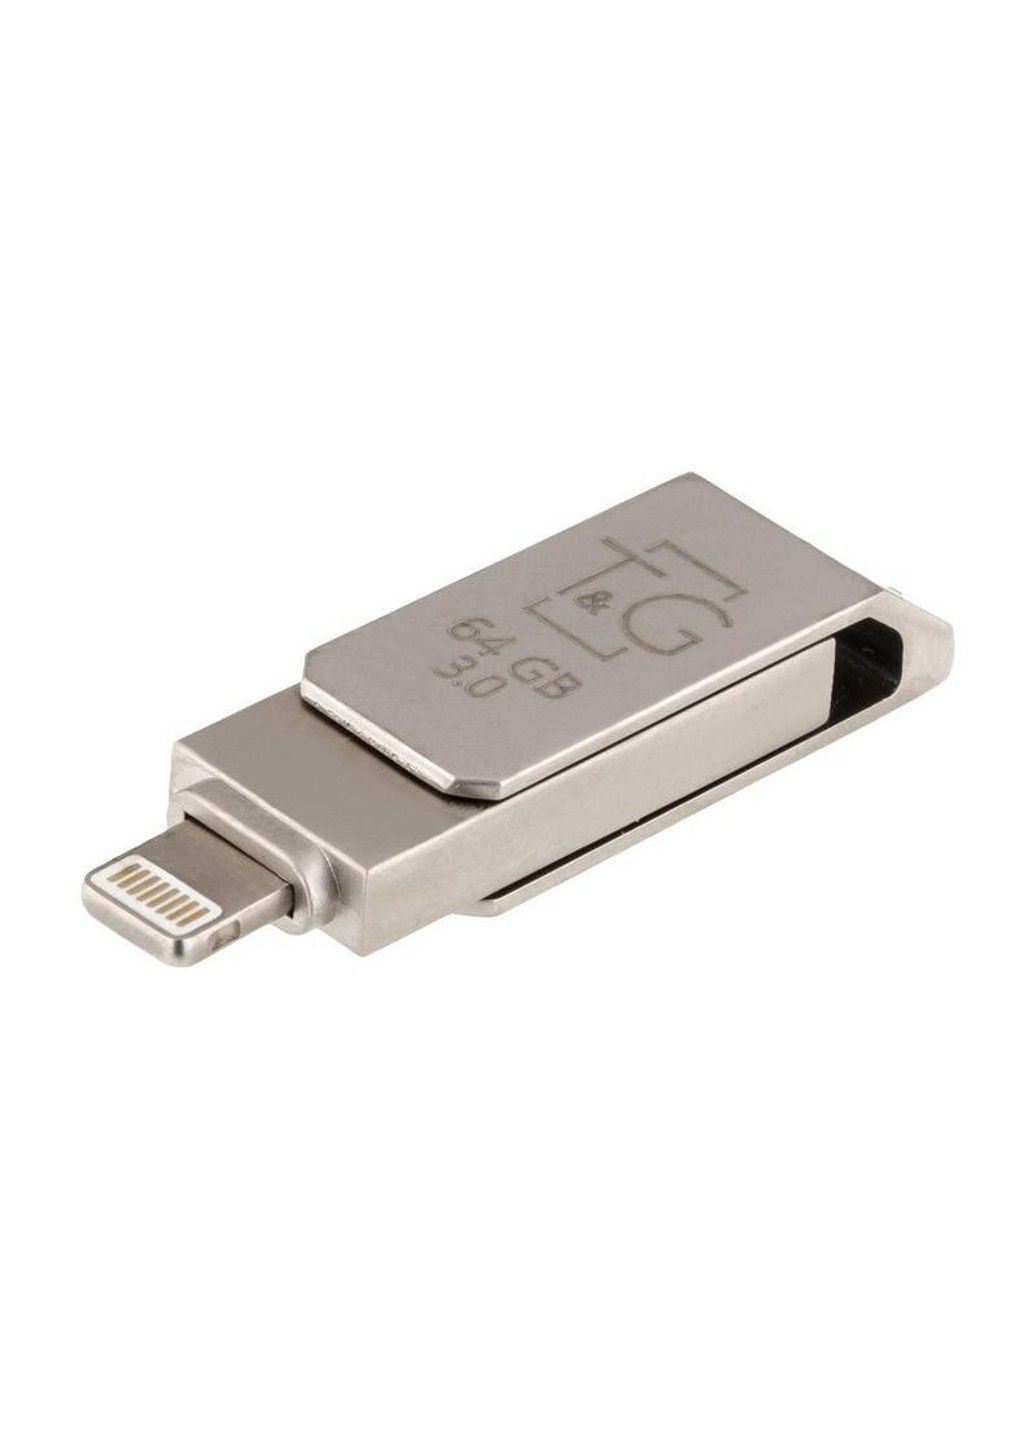 Флеш-драйв 008 Metal series USB 3.0 - Lightning 64GB T&G (291880133)